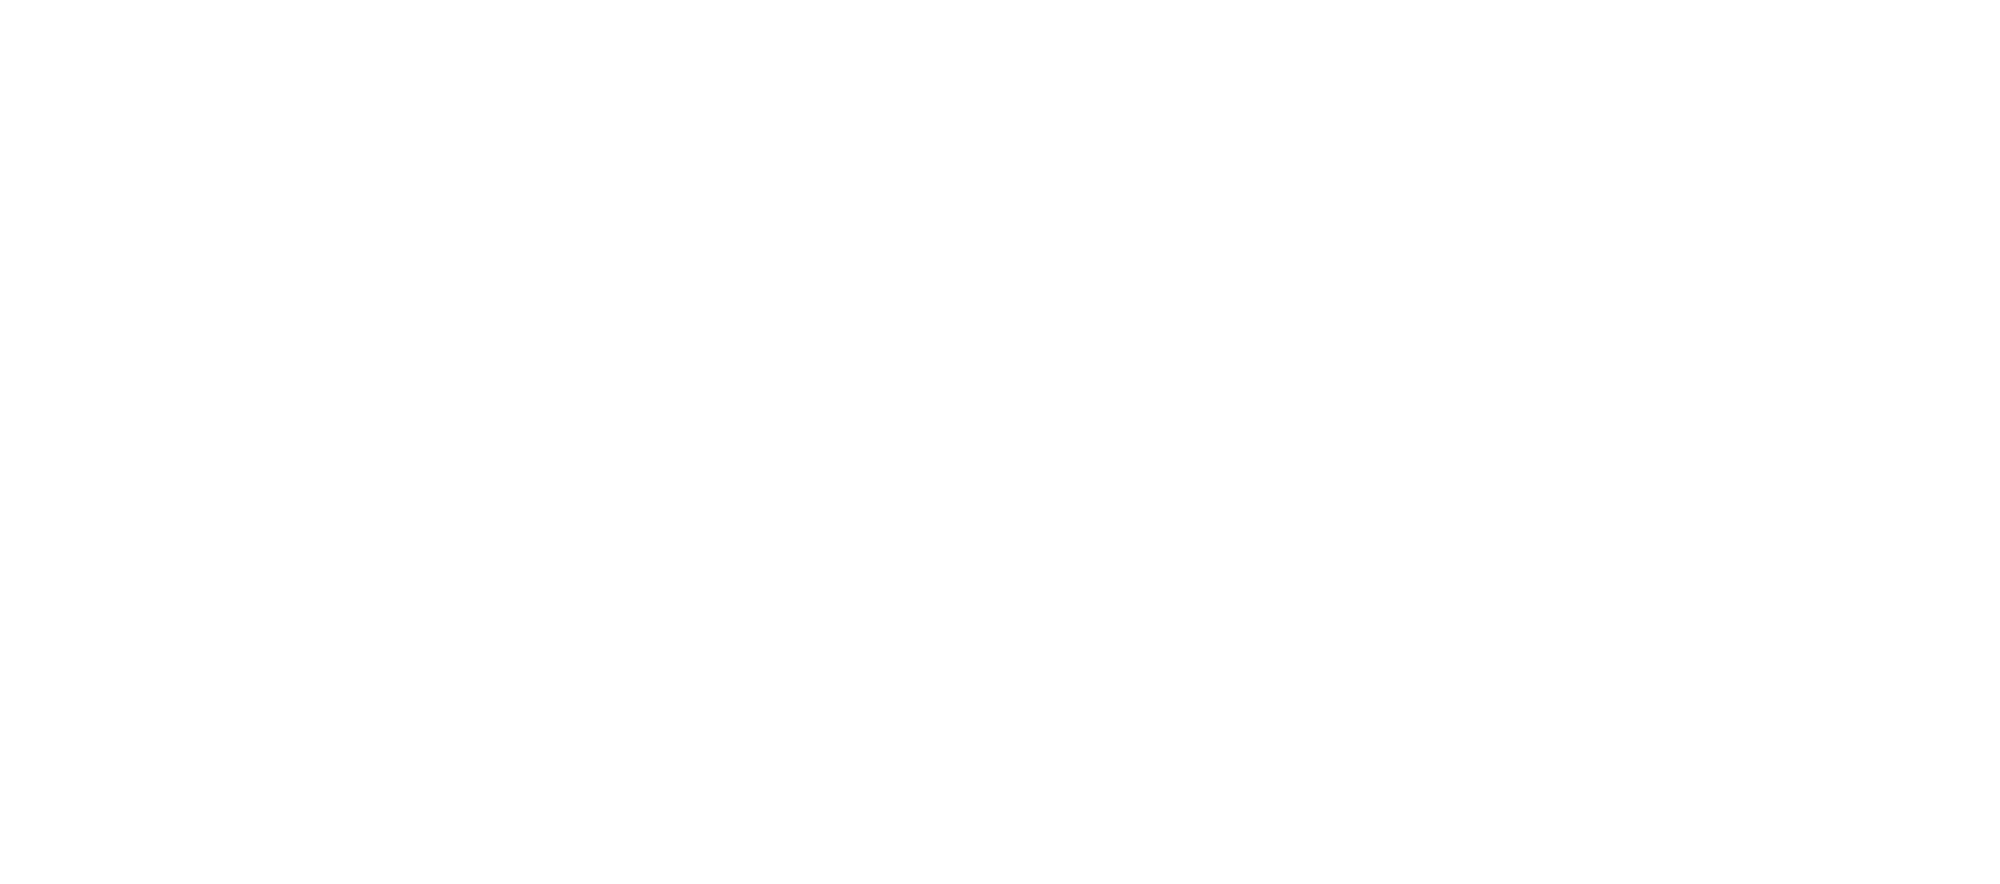 us-commerce-trade